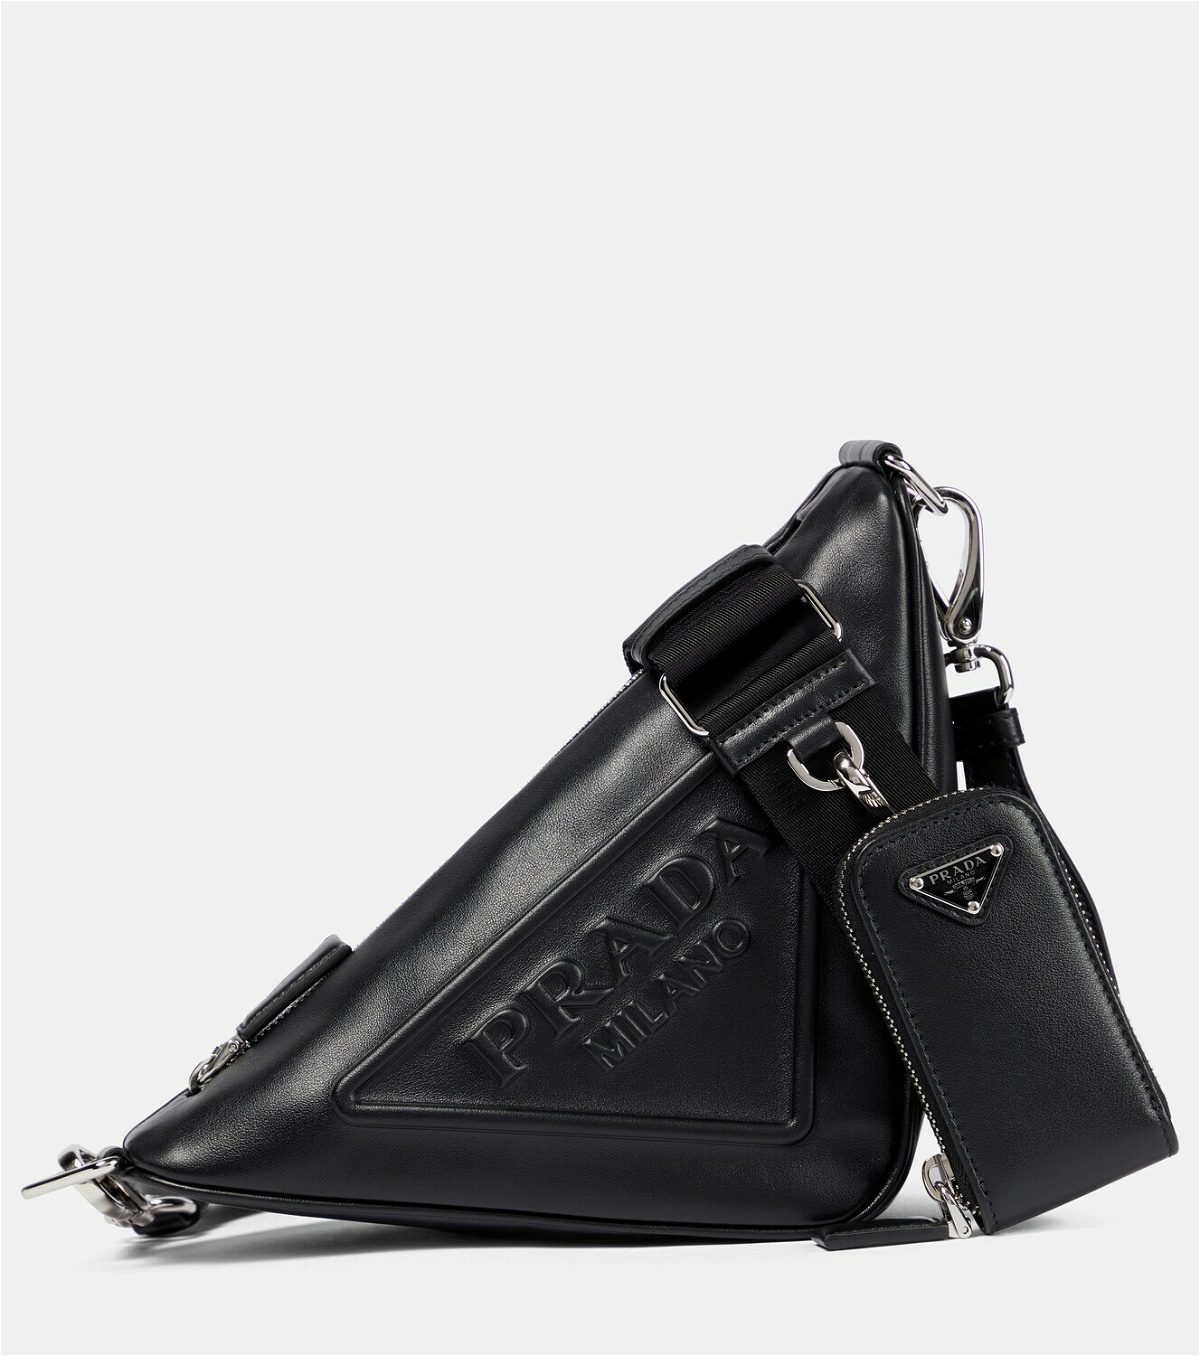 PRADA - Triangle mini leather pouch bag